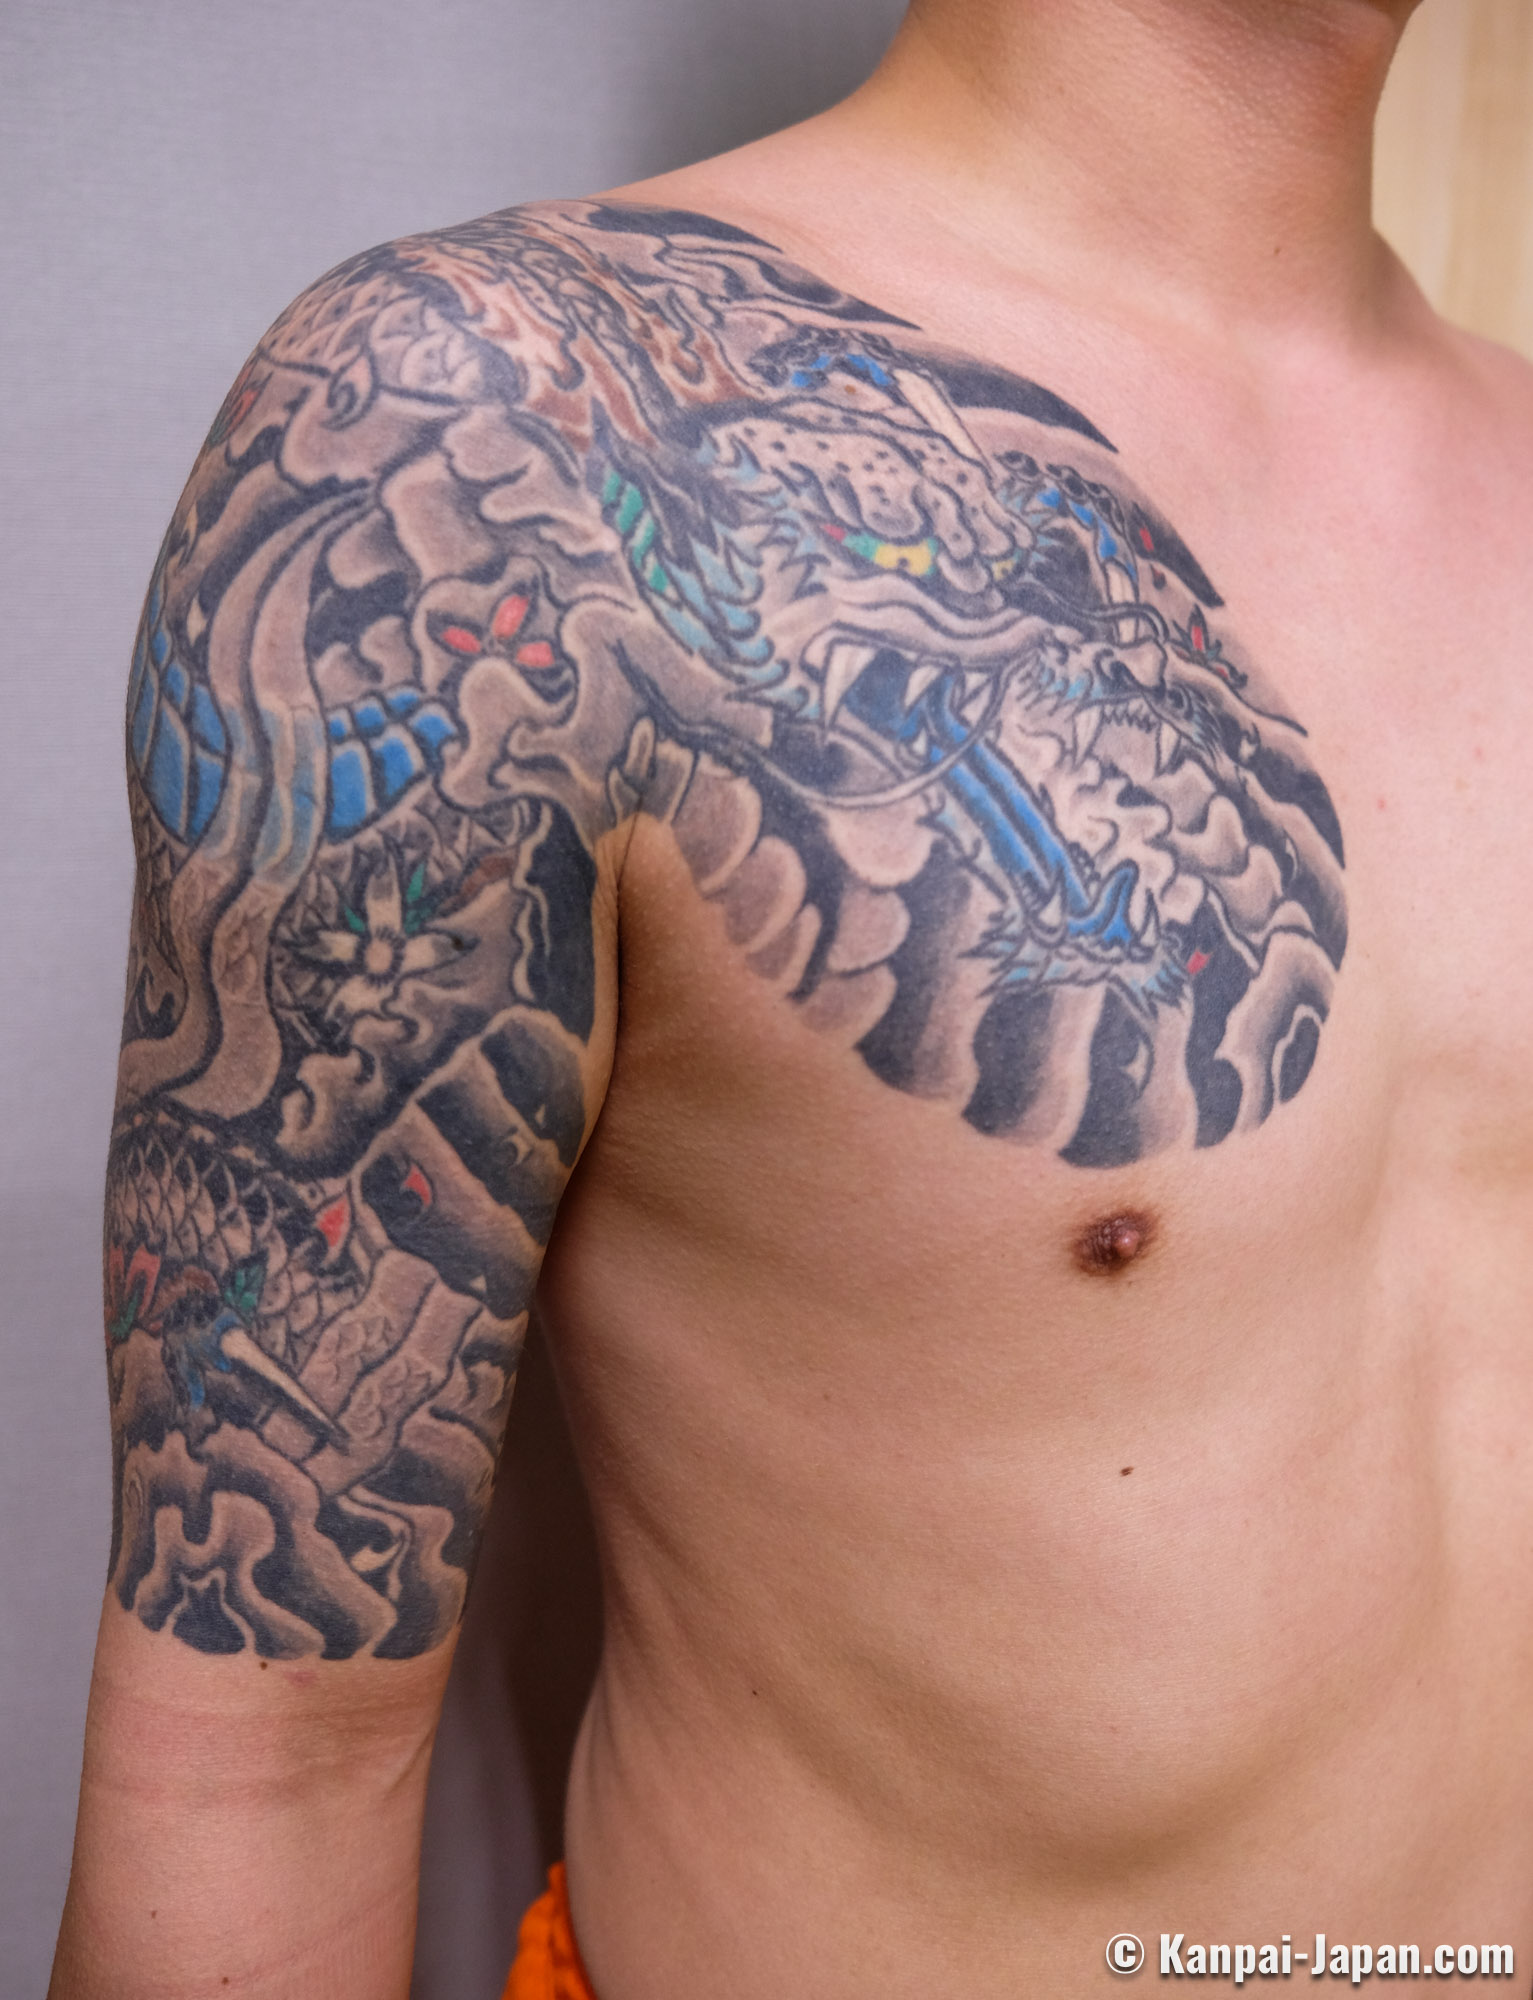 CosaFina tattoo Carlos Art Studio: tatuaje tattoo barcelona dragon ball  majin vegeta capsule radar visor saiyan cosafina cosa fina carlos fabra  tatuador